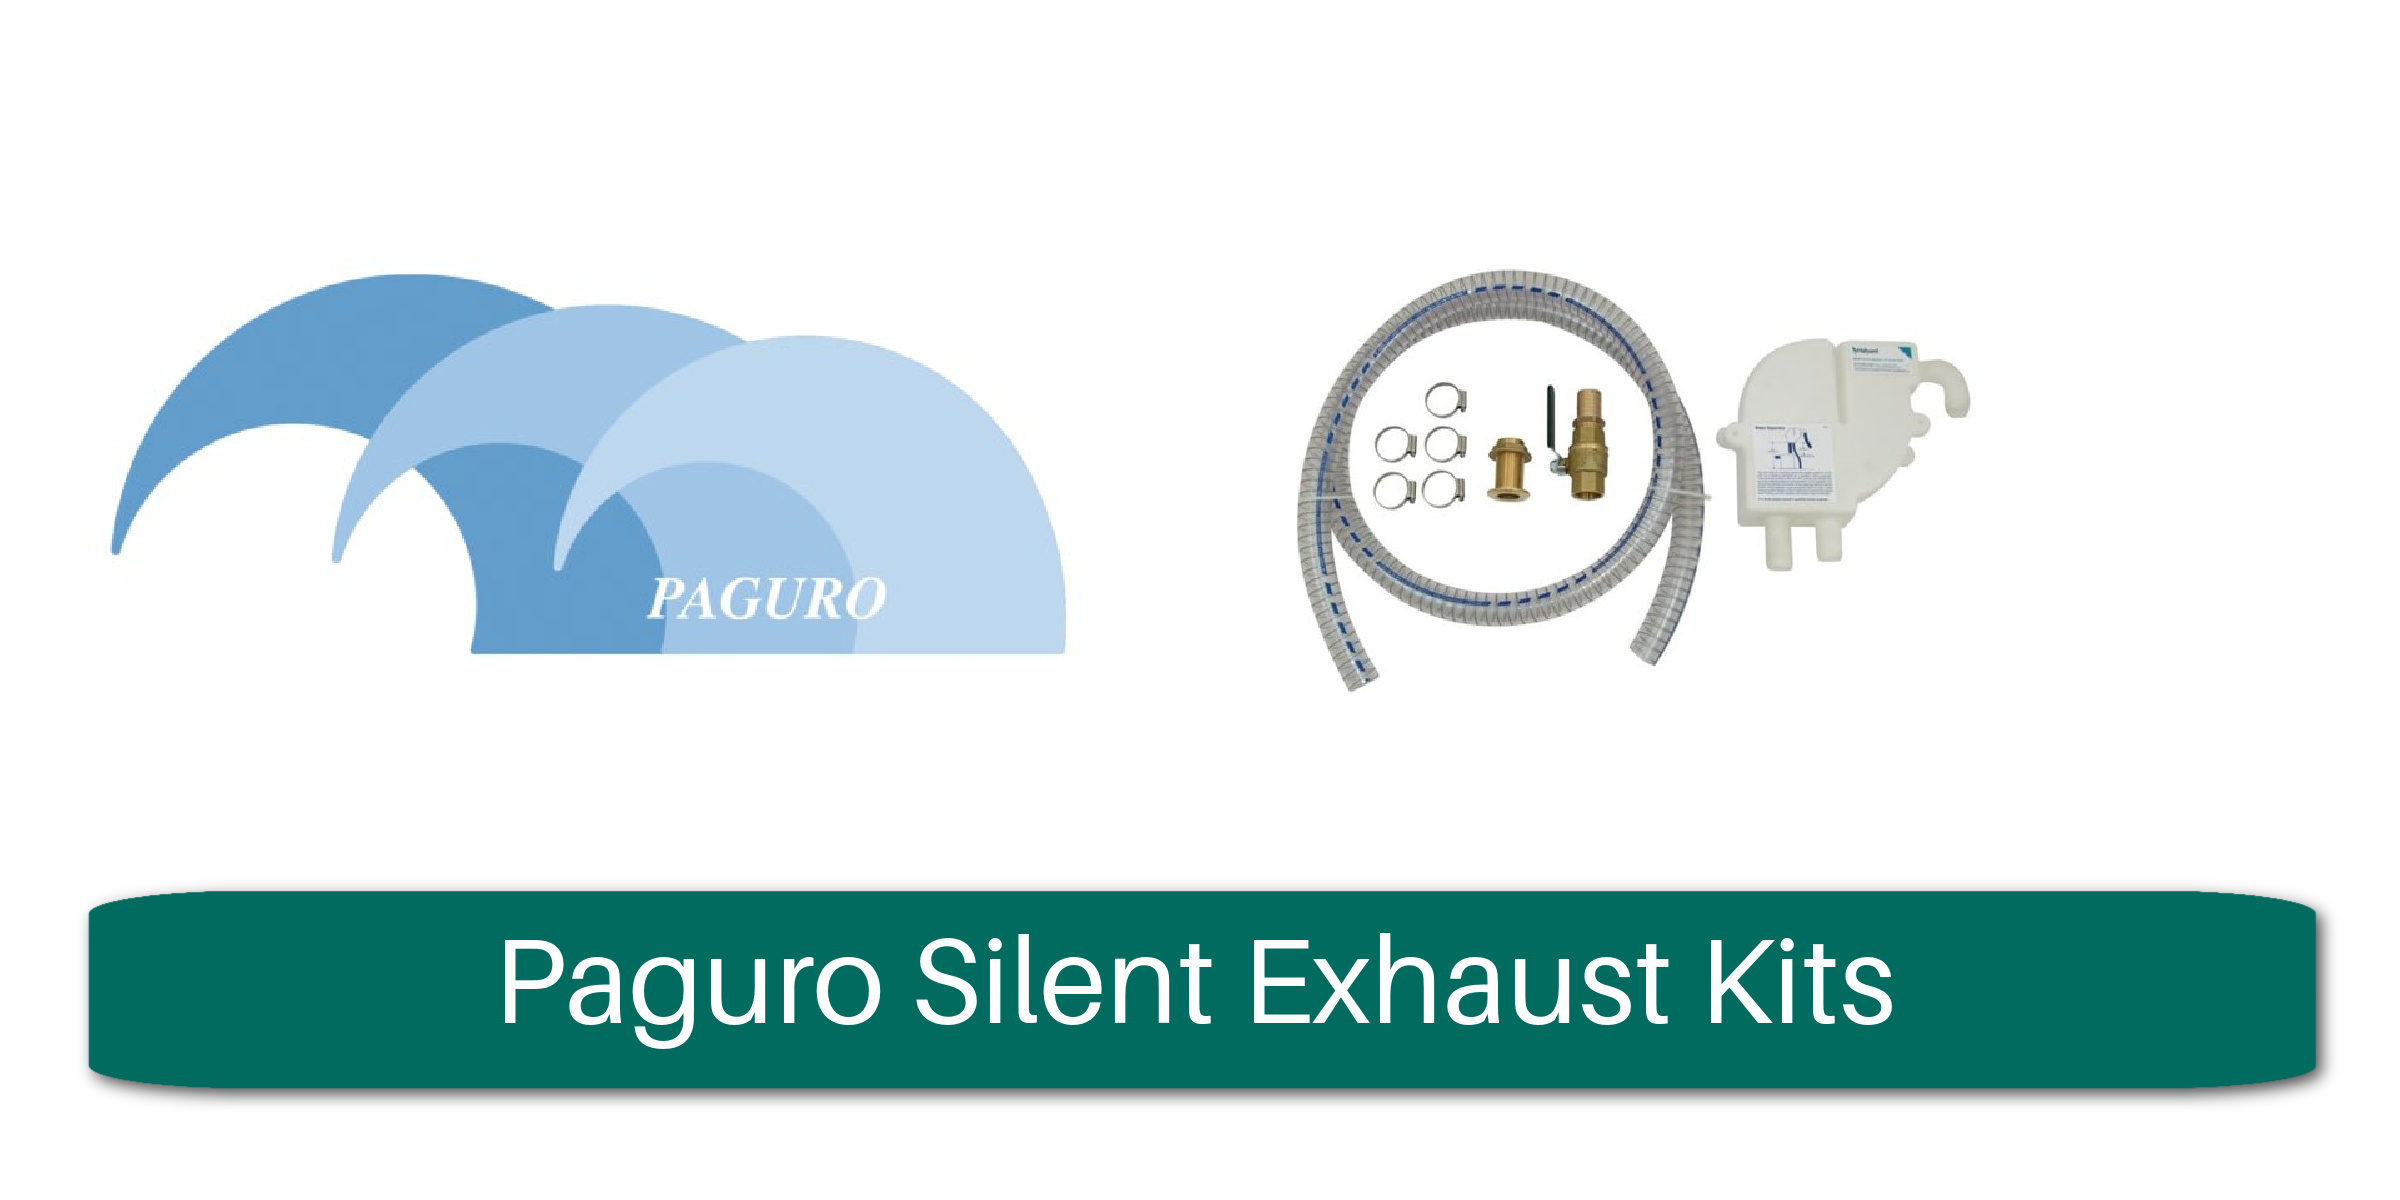 Paguro Silent Exhaust Kits